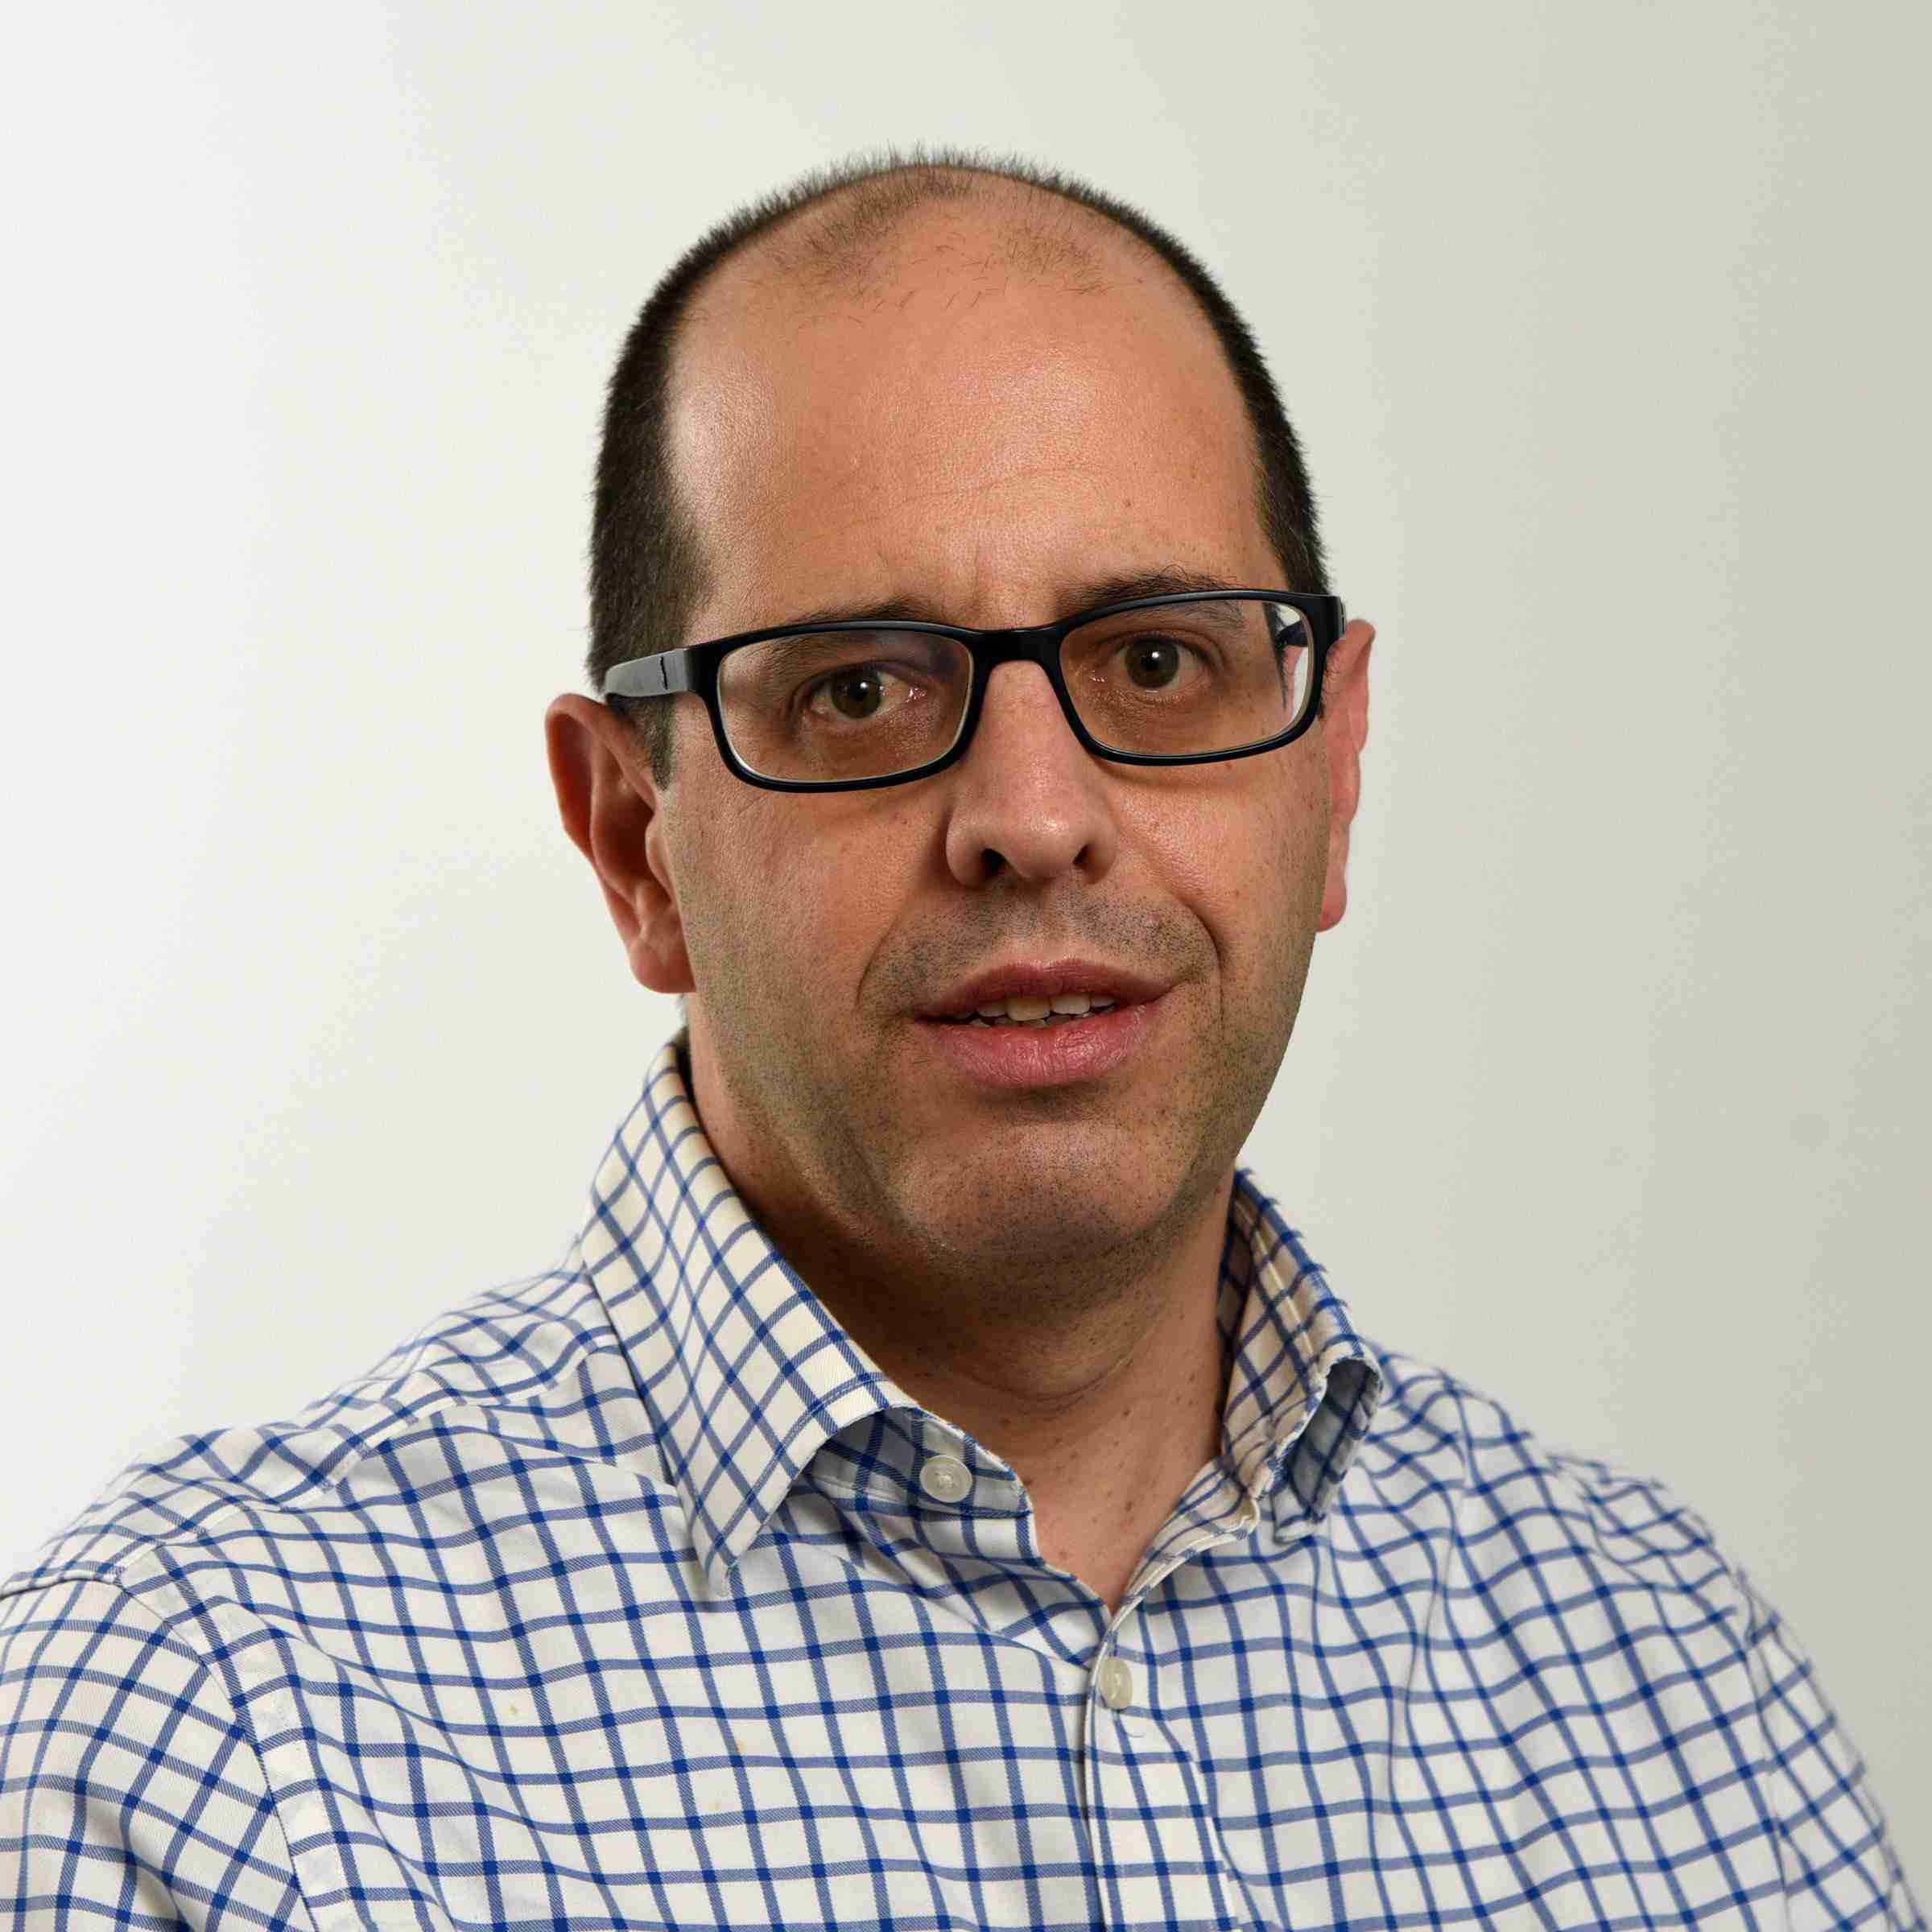 Profile image of Dr Daniel Barreto Gonzalez